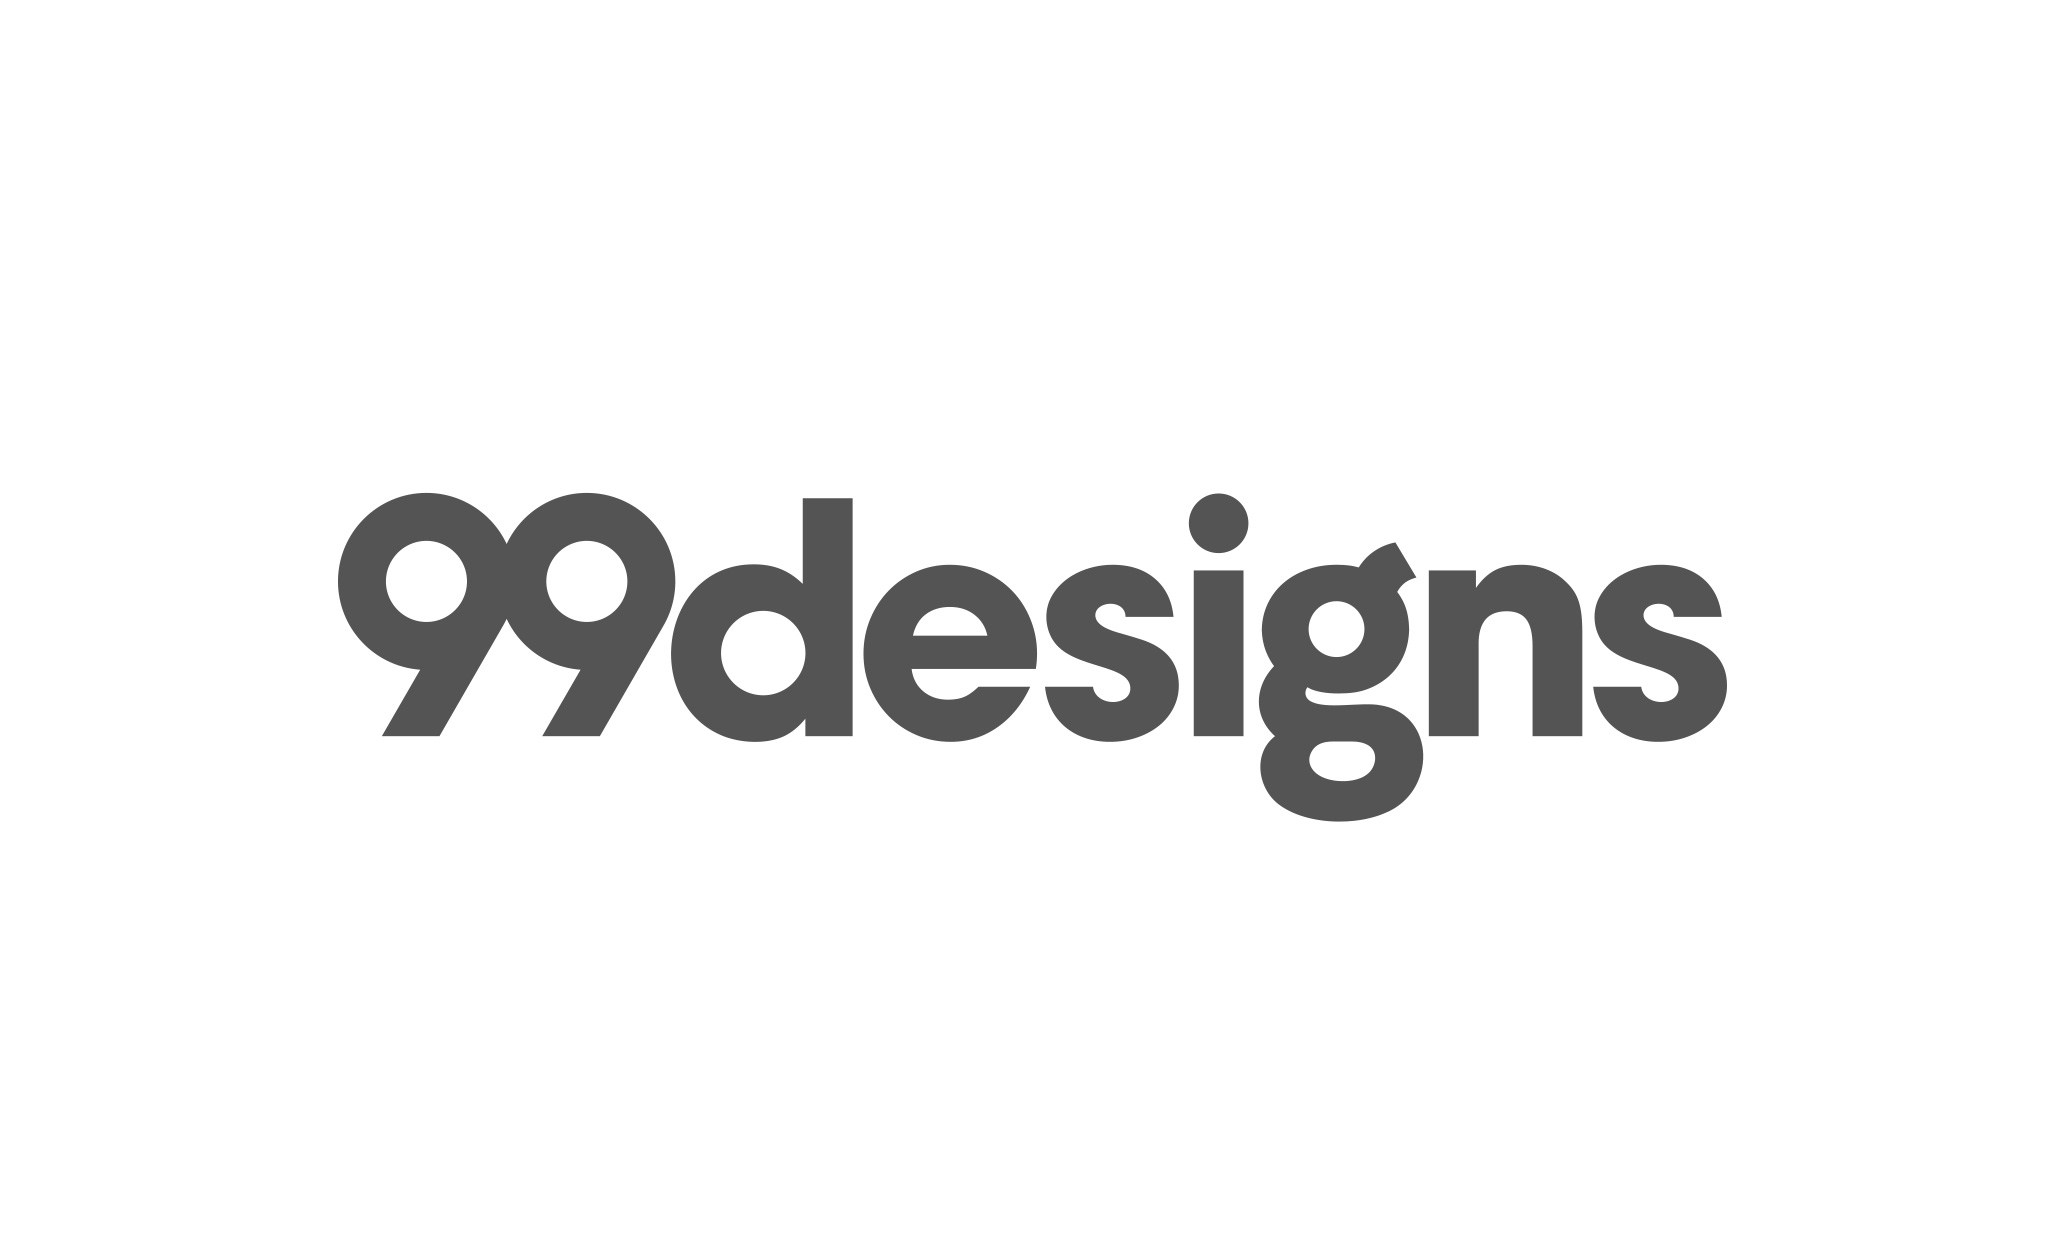 99 Designs Graphics